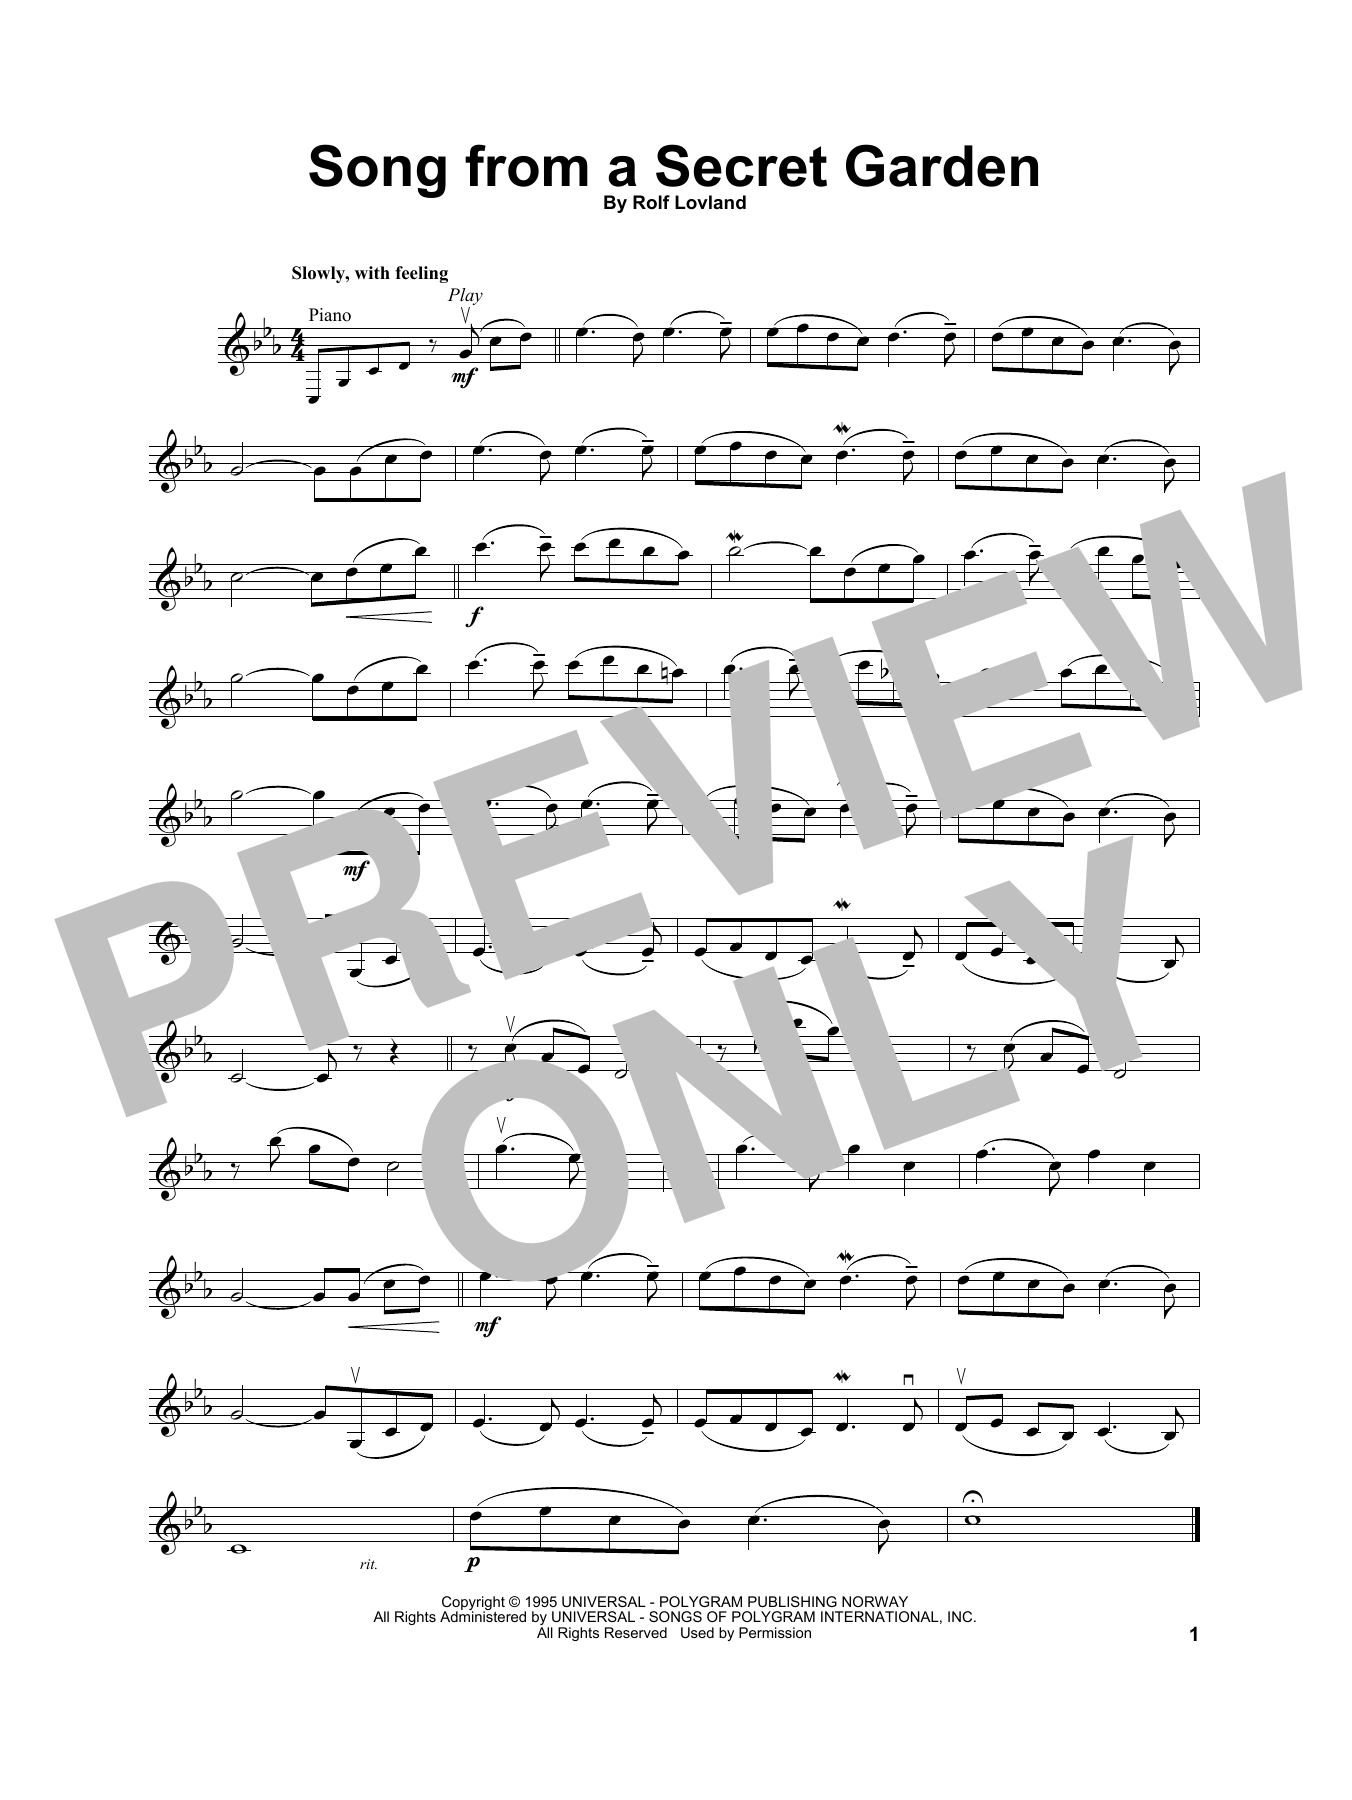 Secret Garden Song From A Secret Garden Sheet Music Notes & Chords for Flute Solo - Download or Print PDF